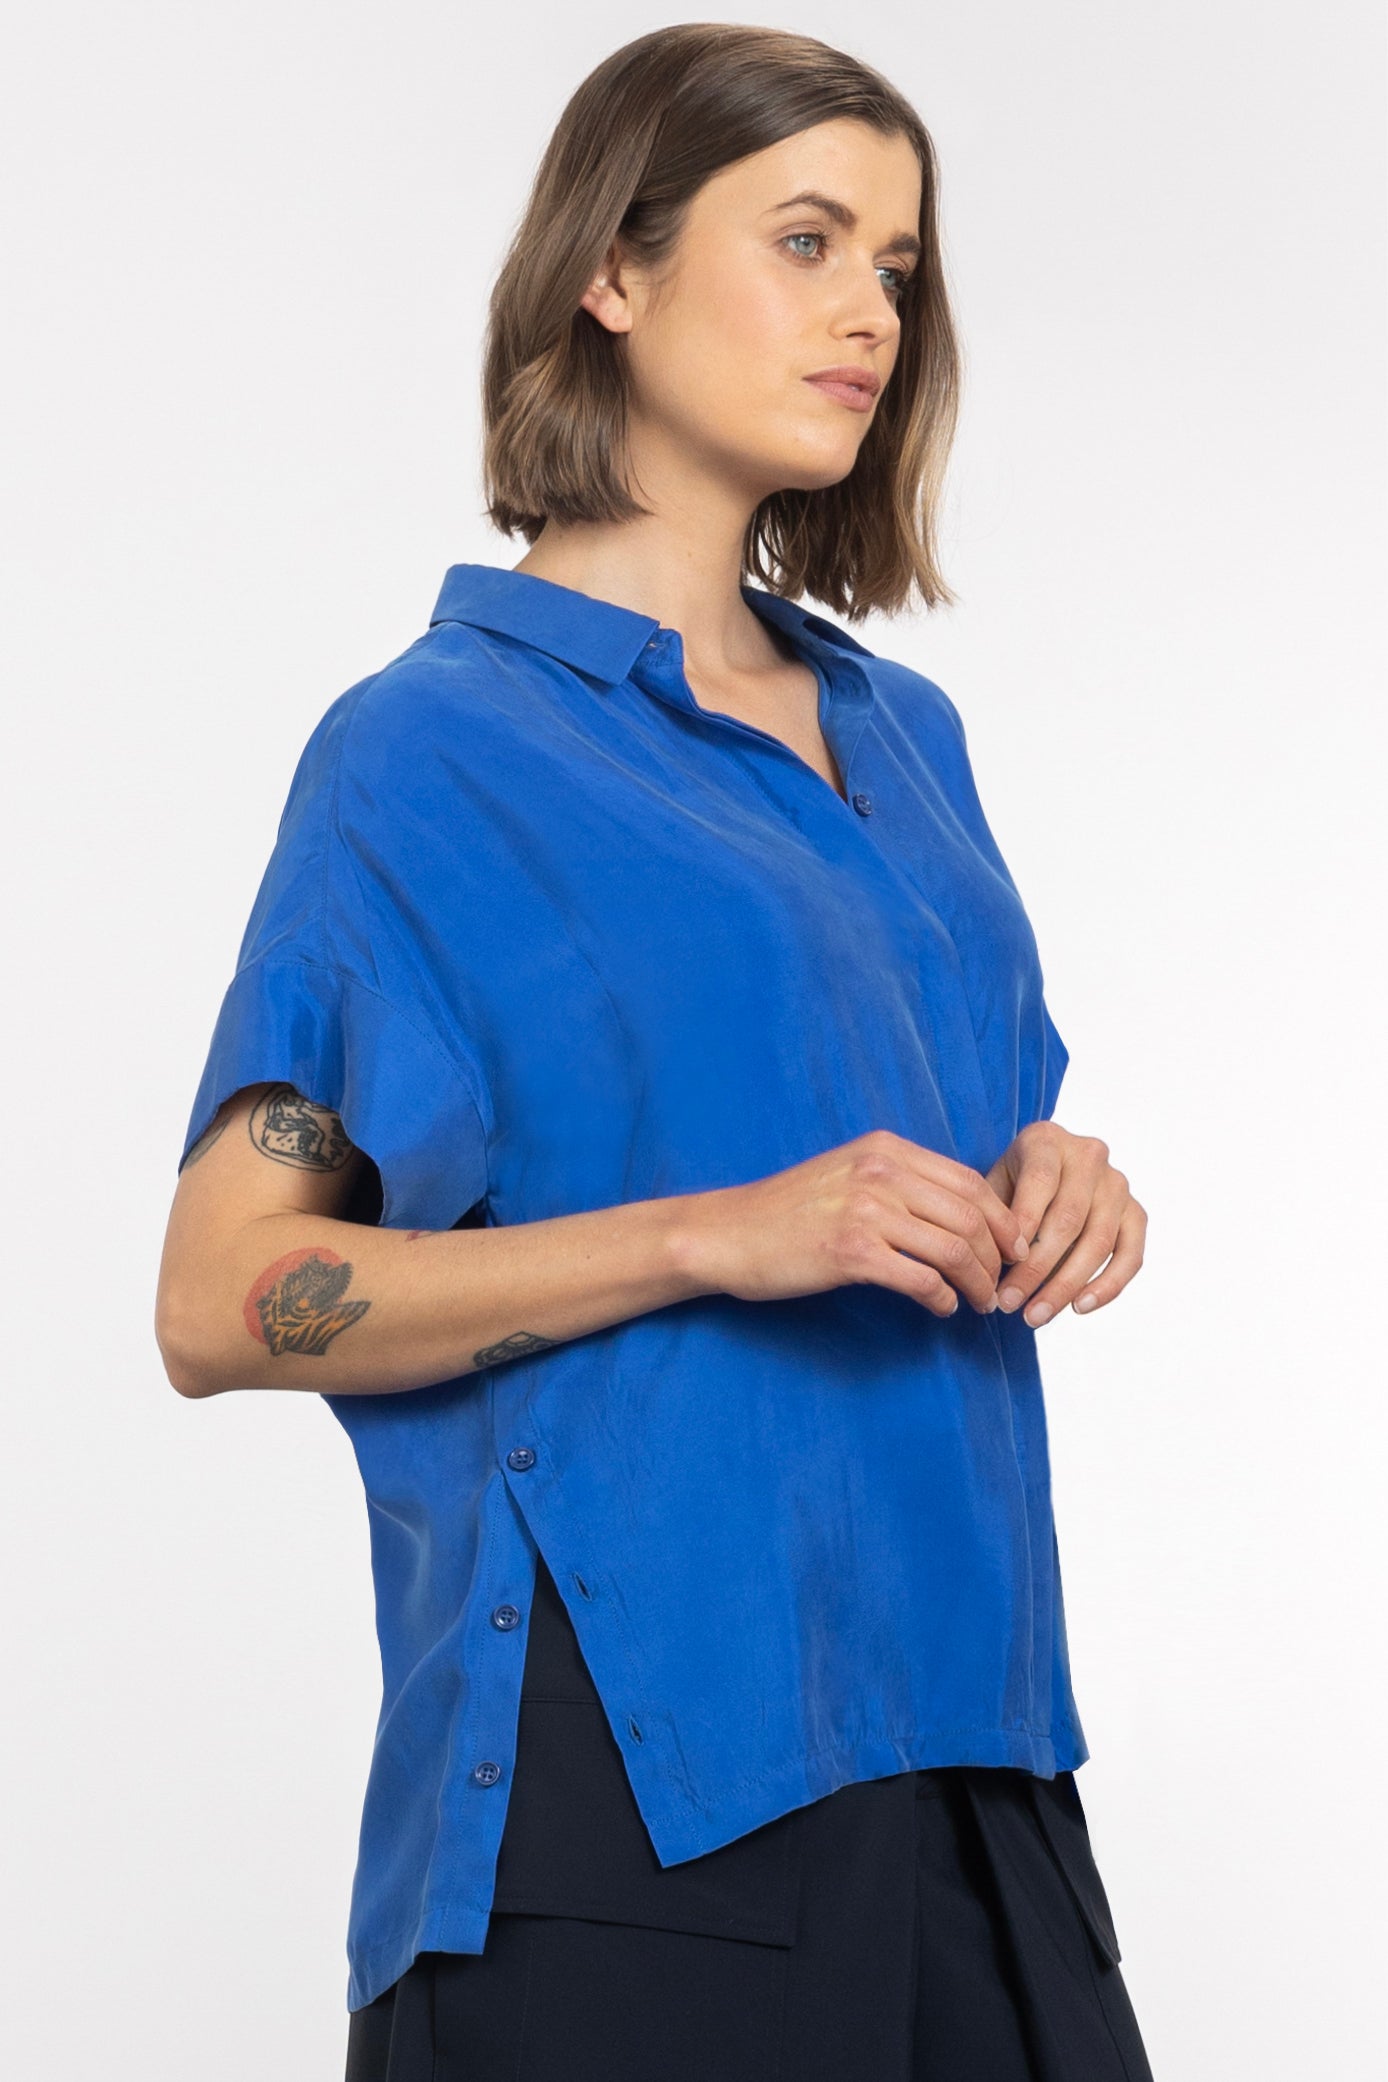 Onyx Short Sleeve Shirt in Blue, REPERTOIRE